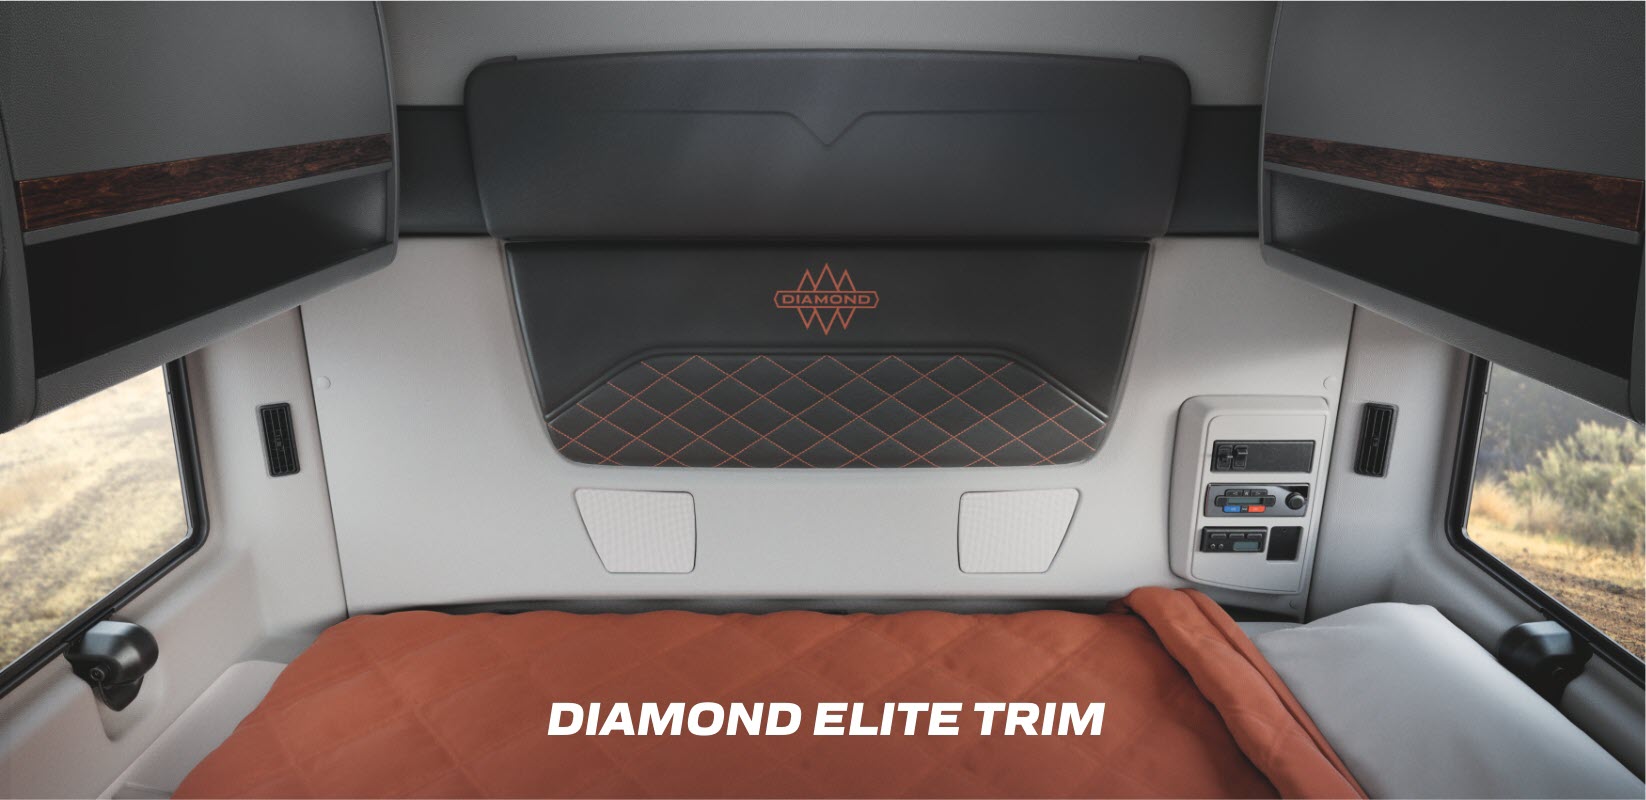 HX Series Interior Diamond Elite Trim